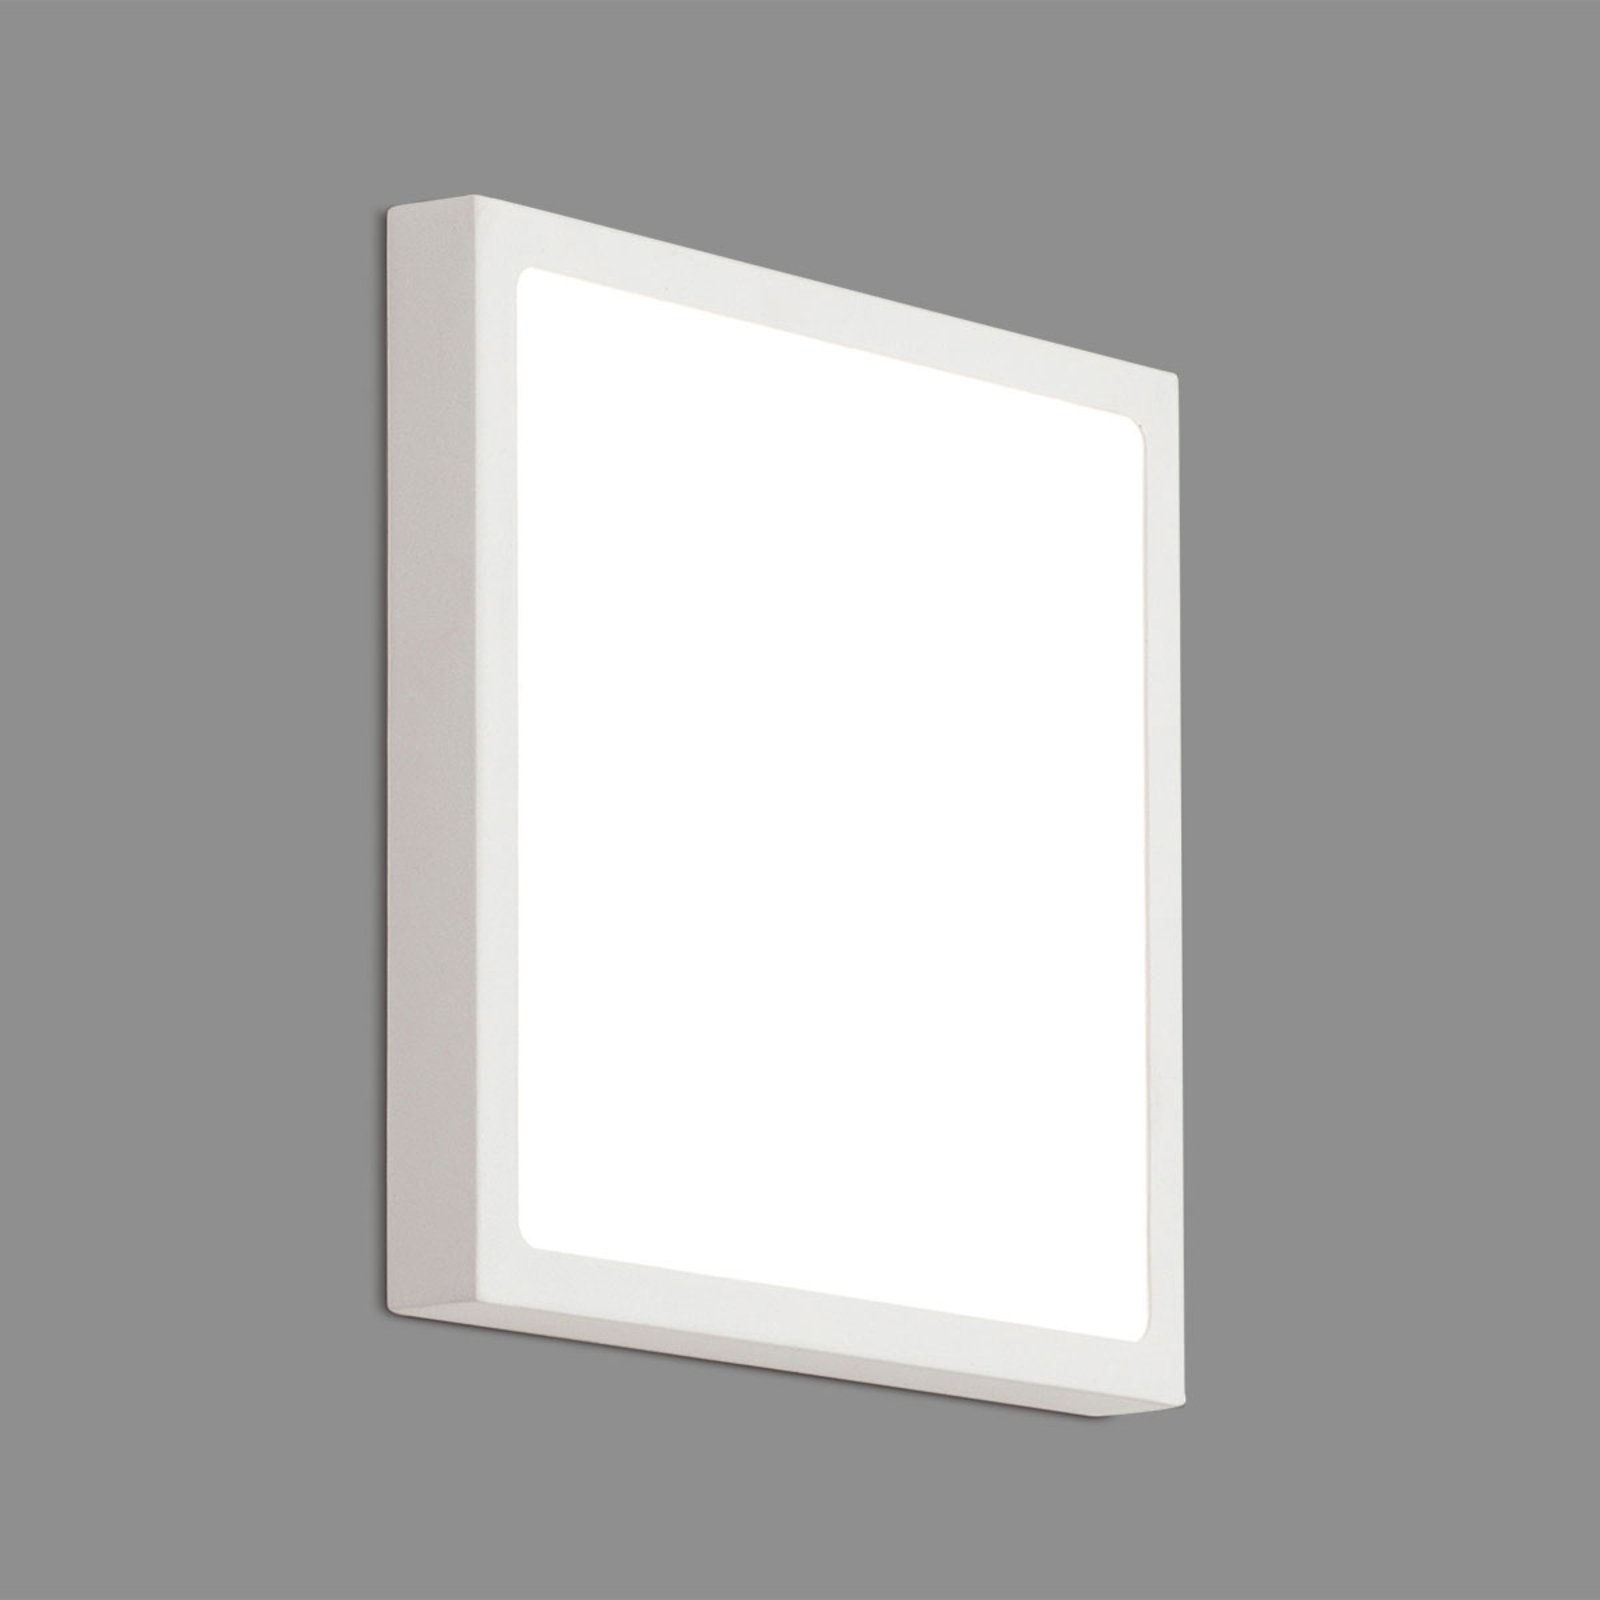 Aplique LED Vika, cuadrado, blanco, 23x23cm